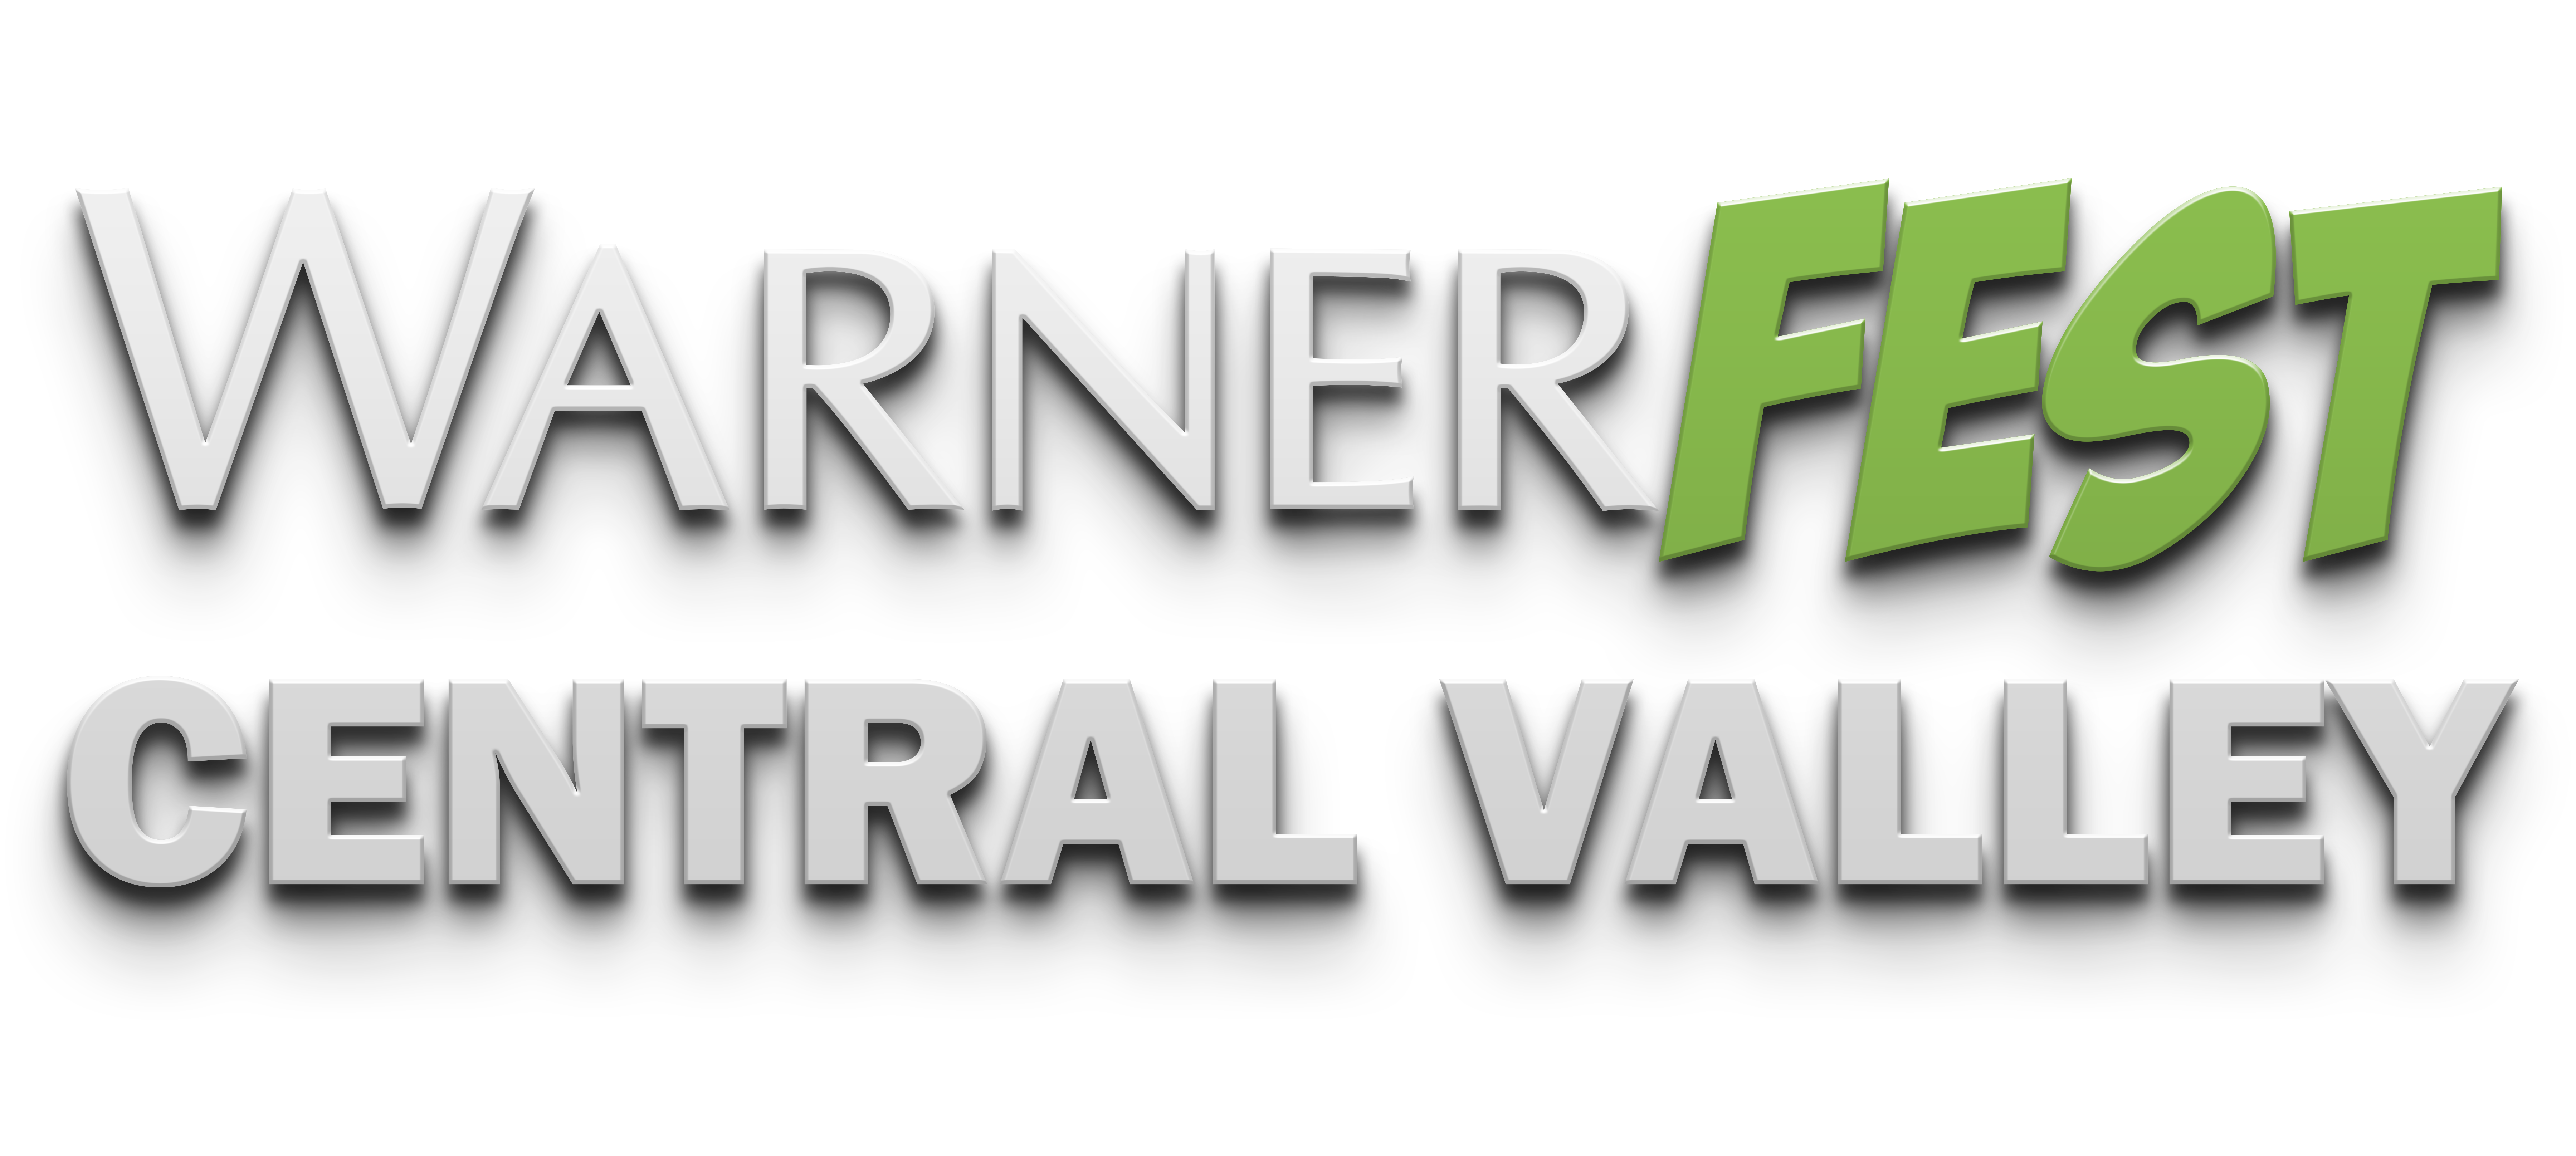 WarnerFest Central Valley - Logo_reversed.png